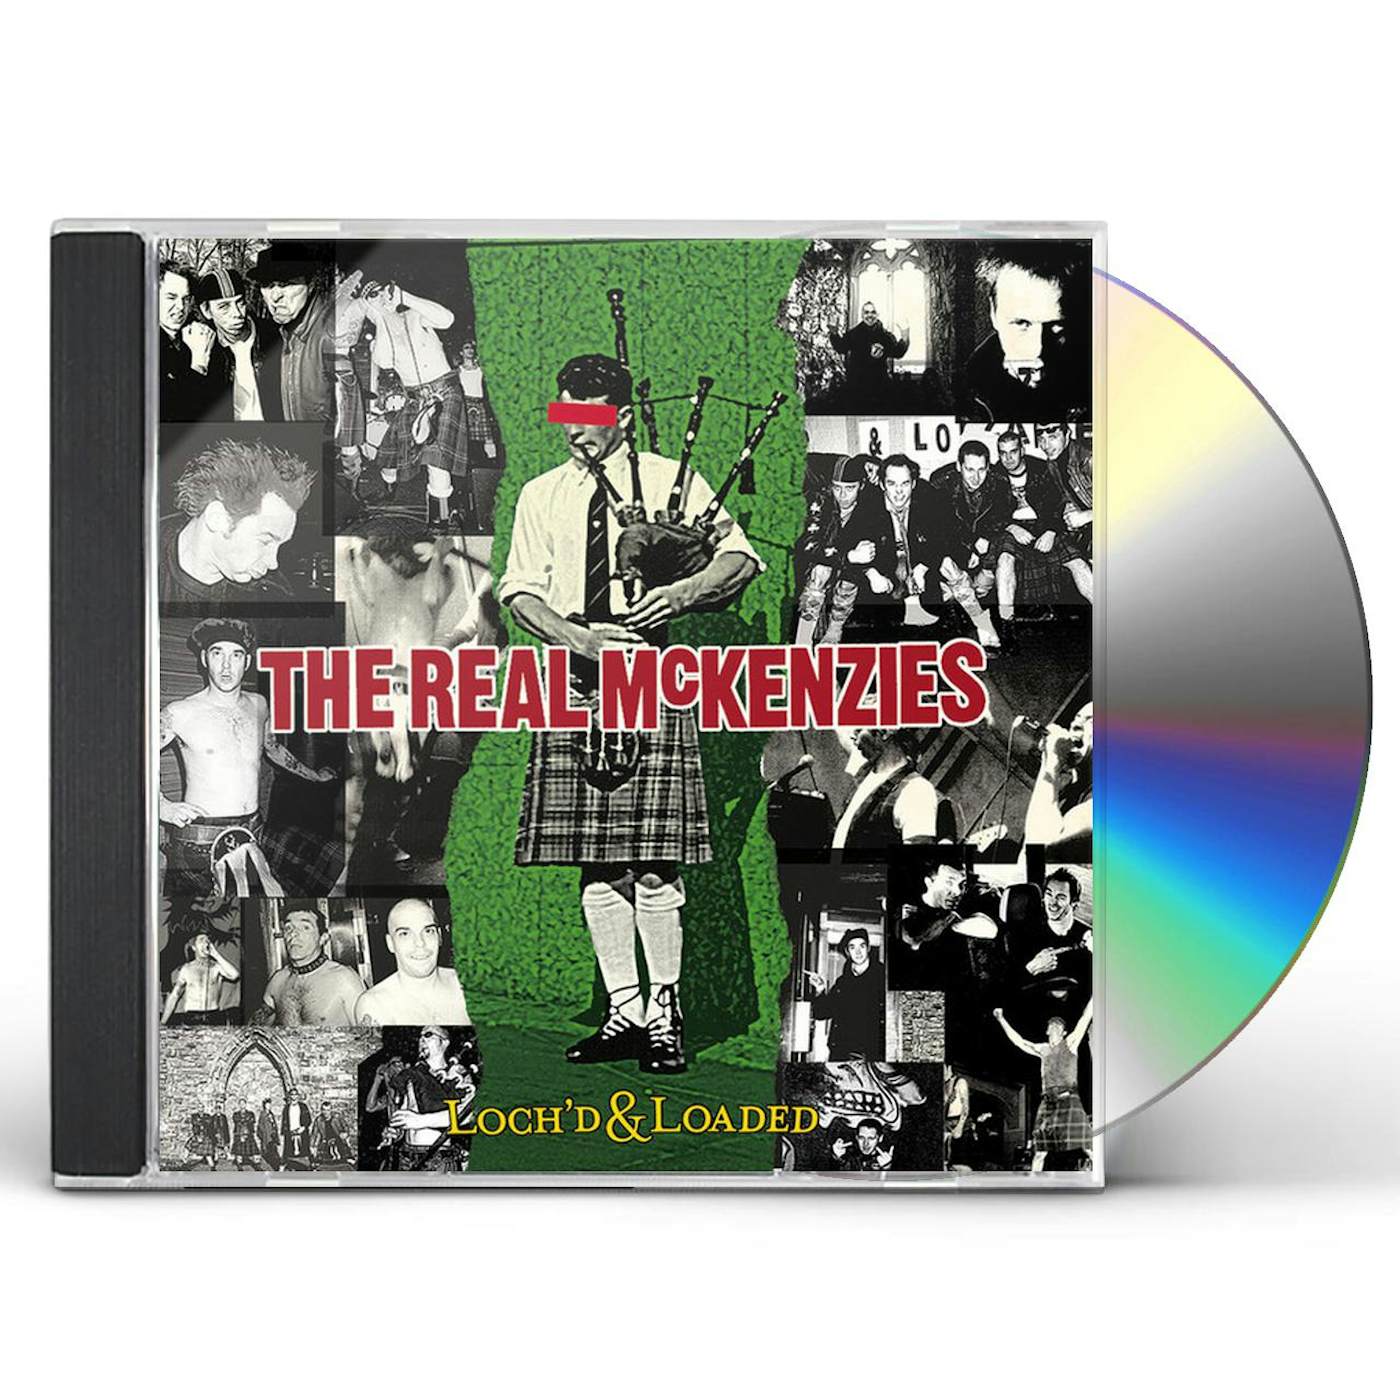 The Real McKenzies LOCHD & LOADED CD